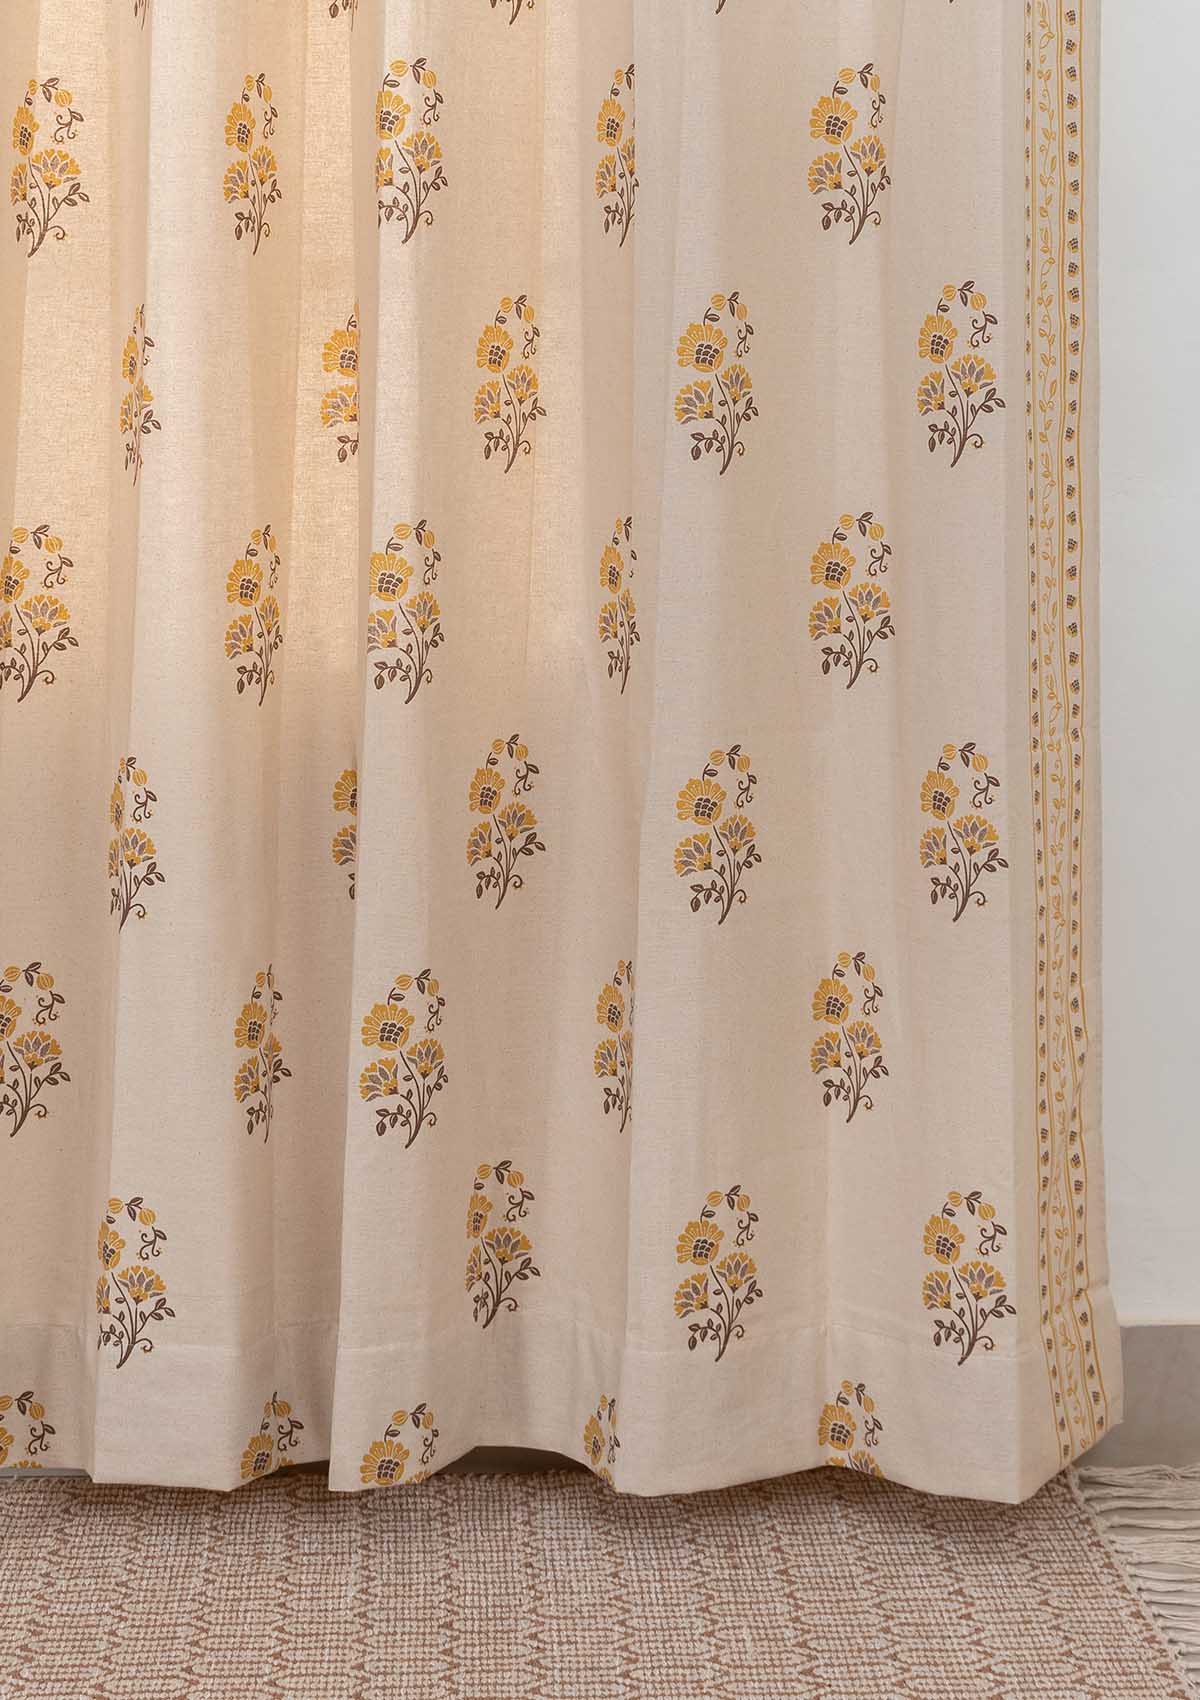 Indus 100% Customizable Cotton ethnic curtain for living room - Room darkening - Amber